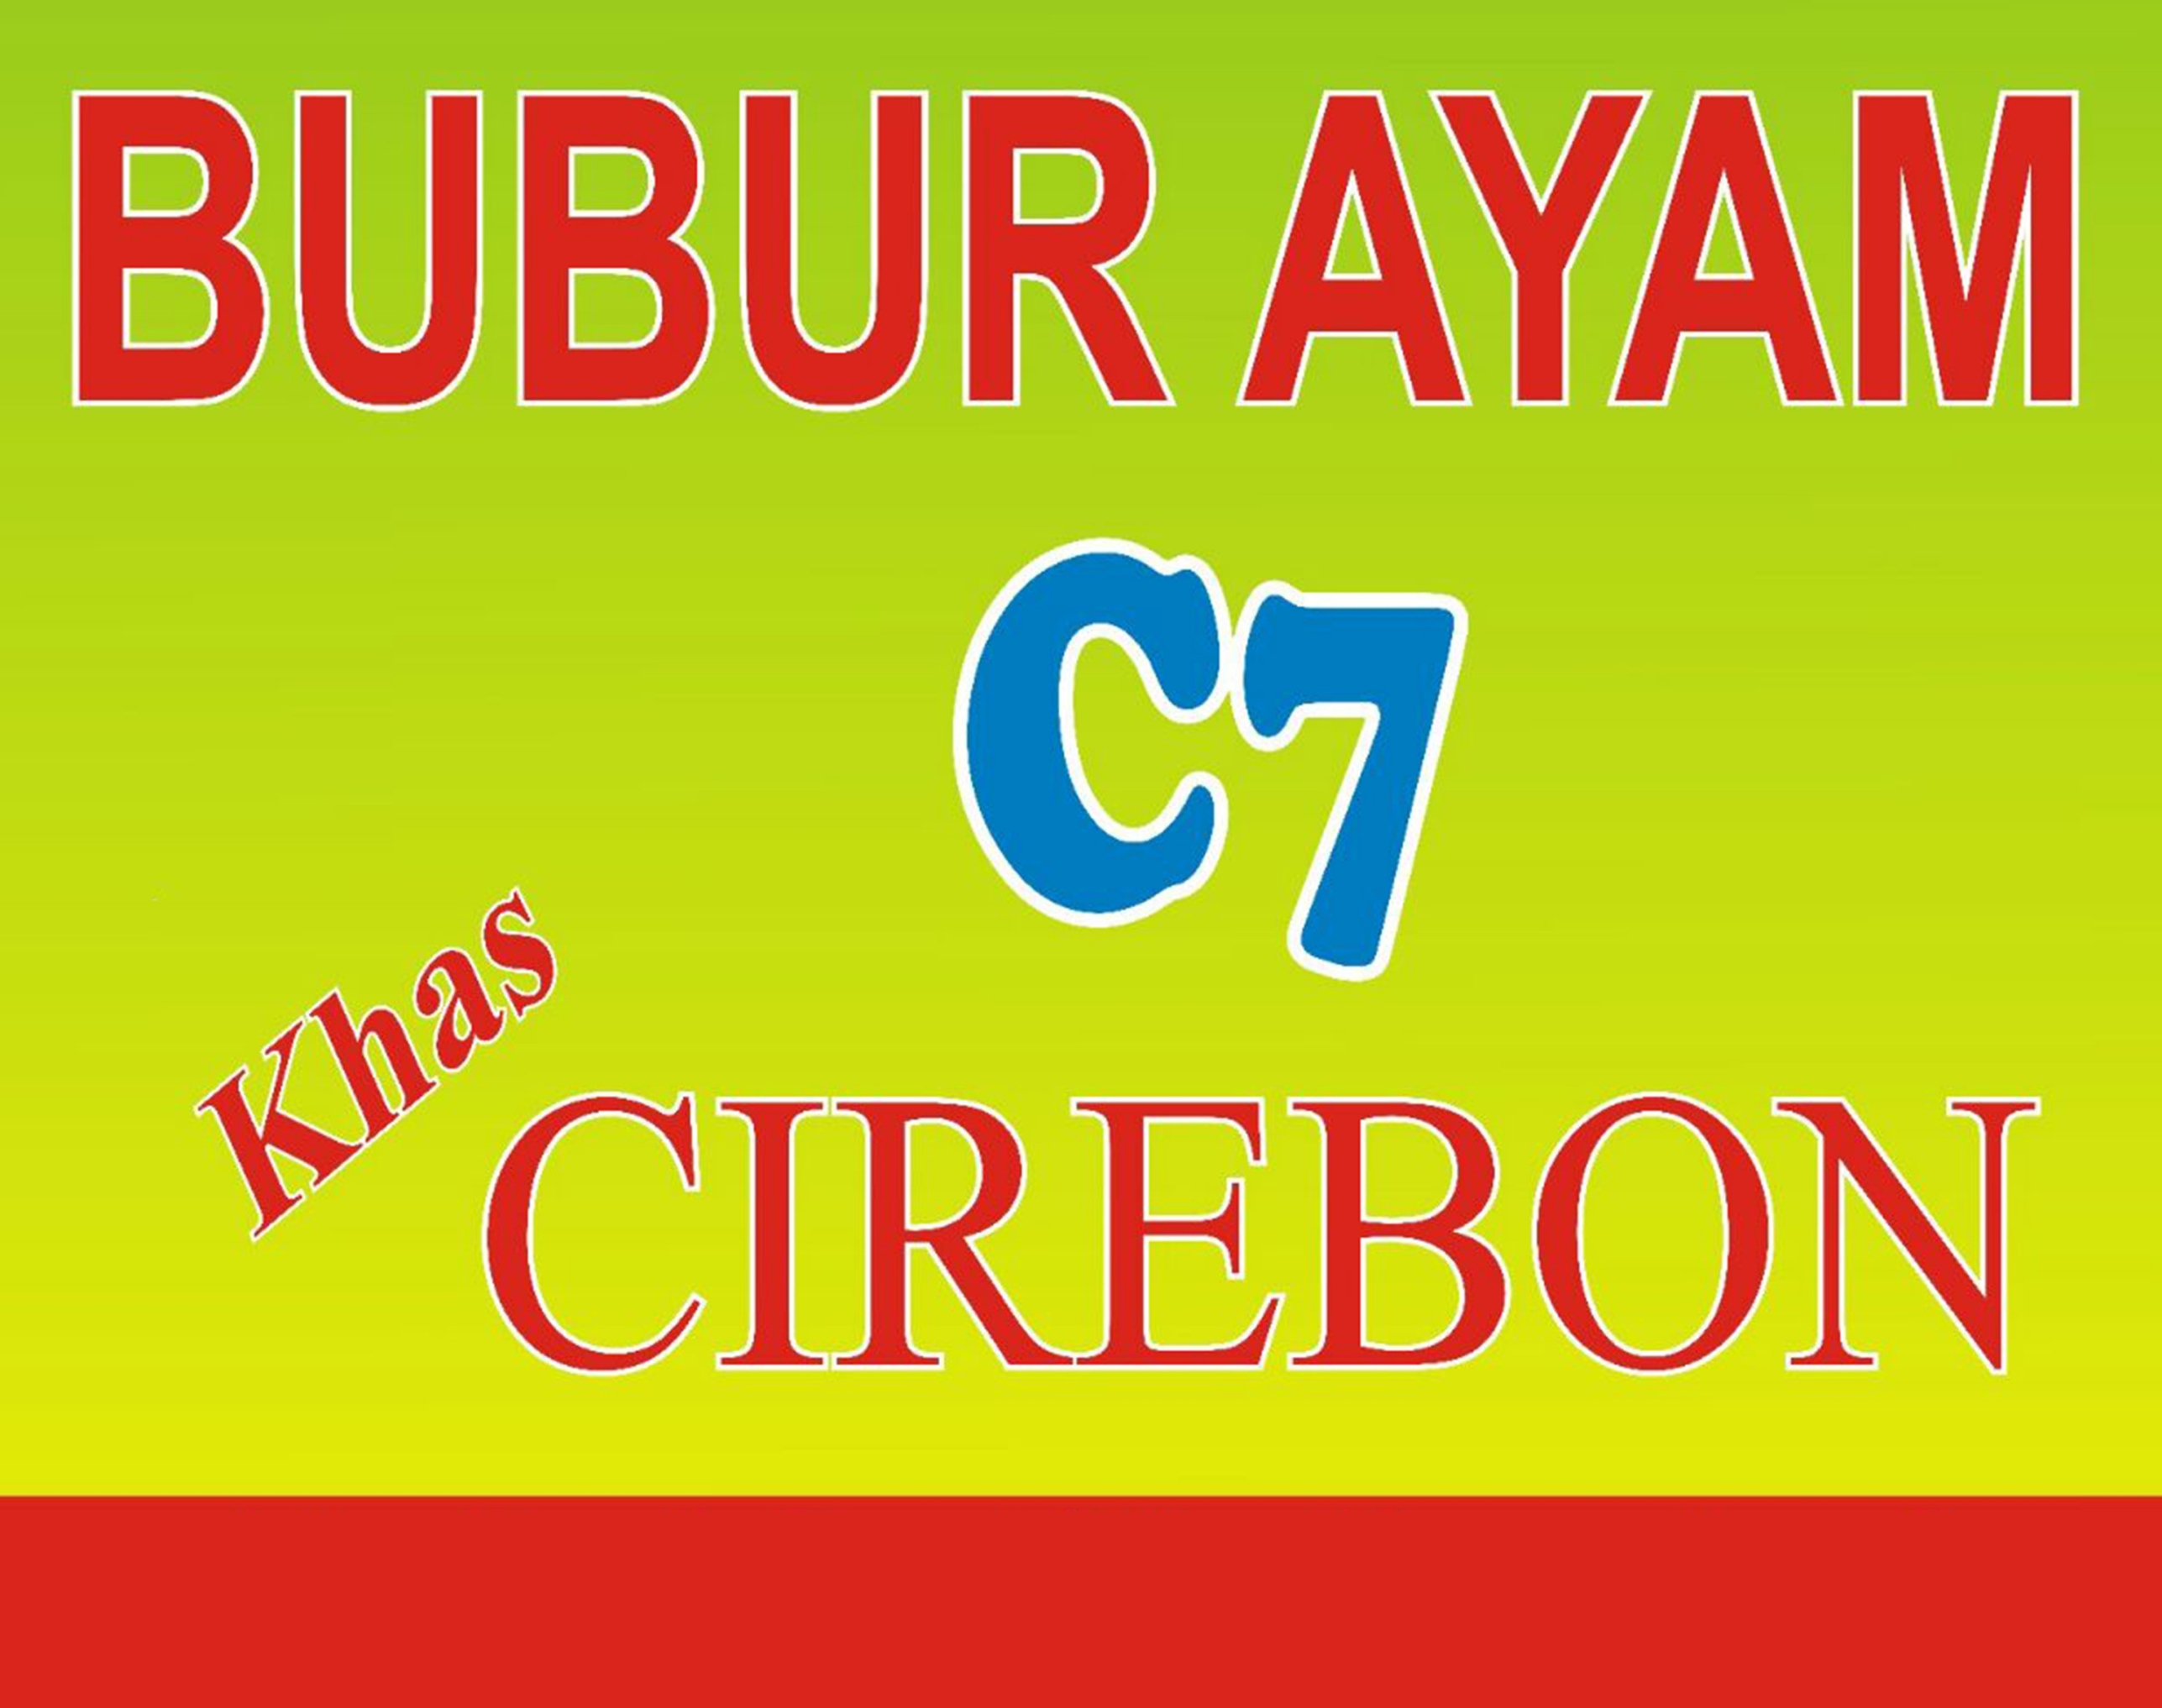 Trademark BUBUR AYAM C 7 Khas CIREBON + Lukisan